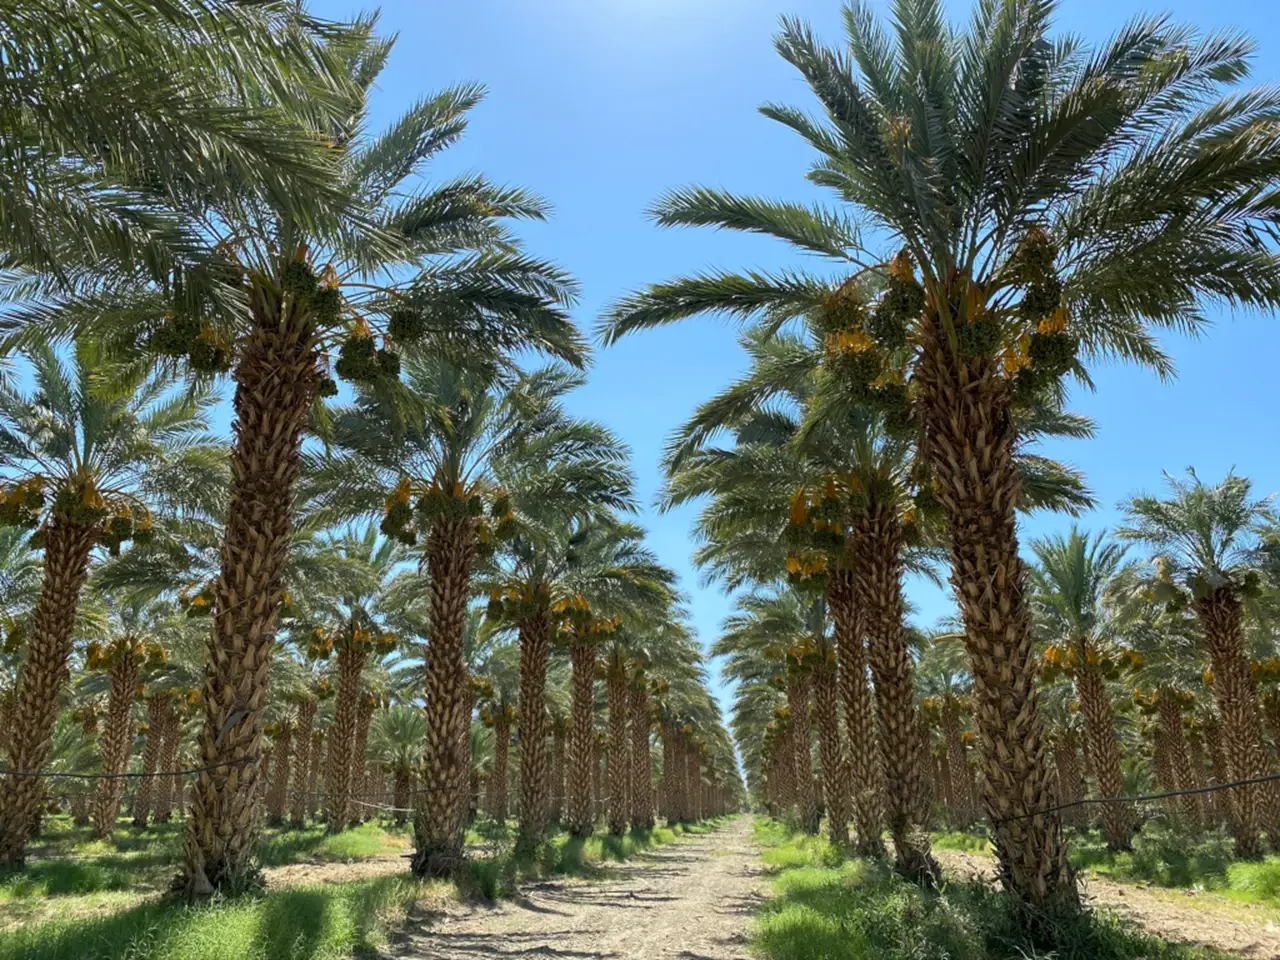 Date Palm Farming